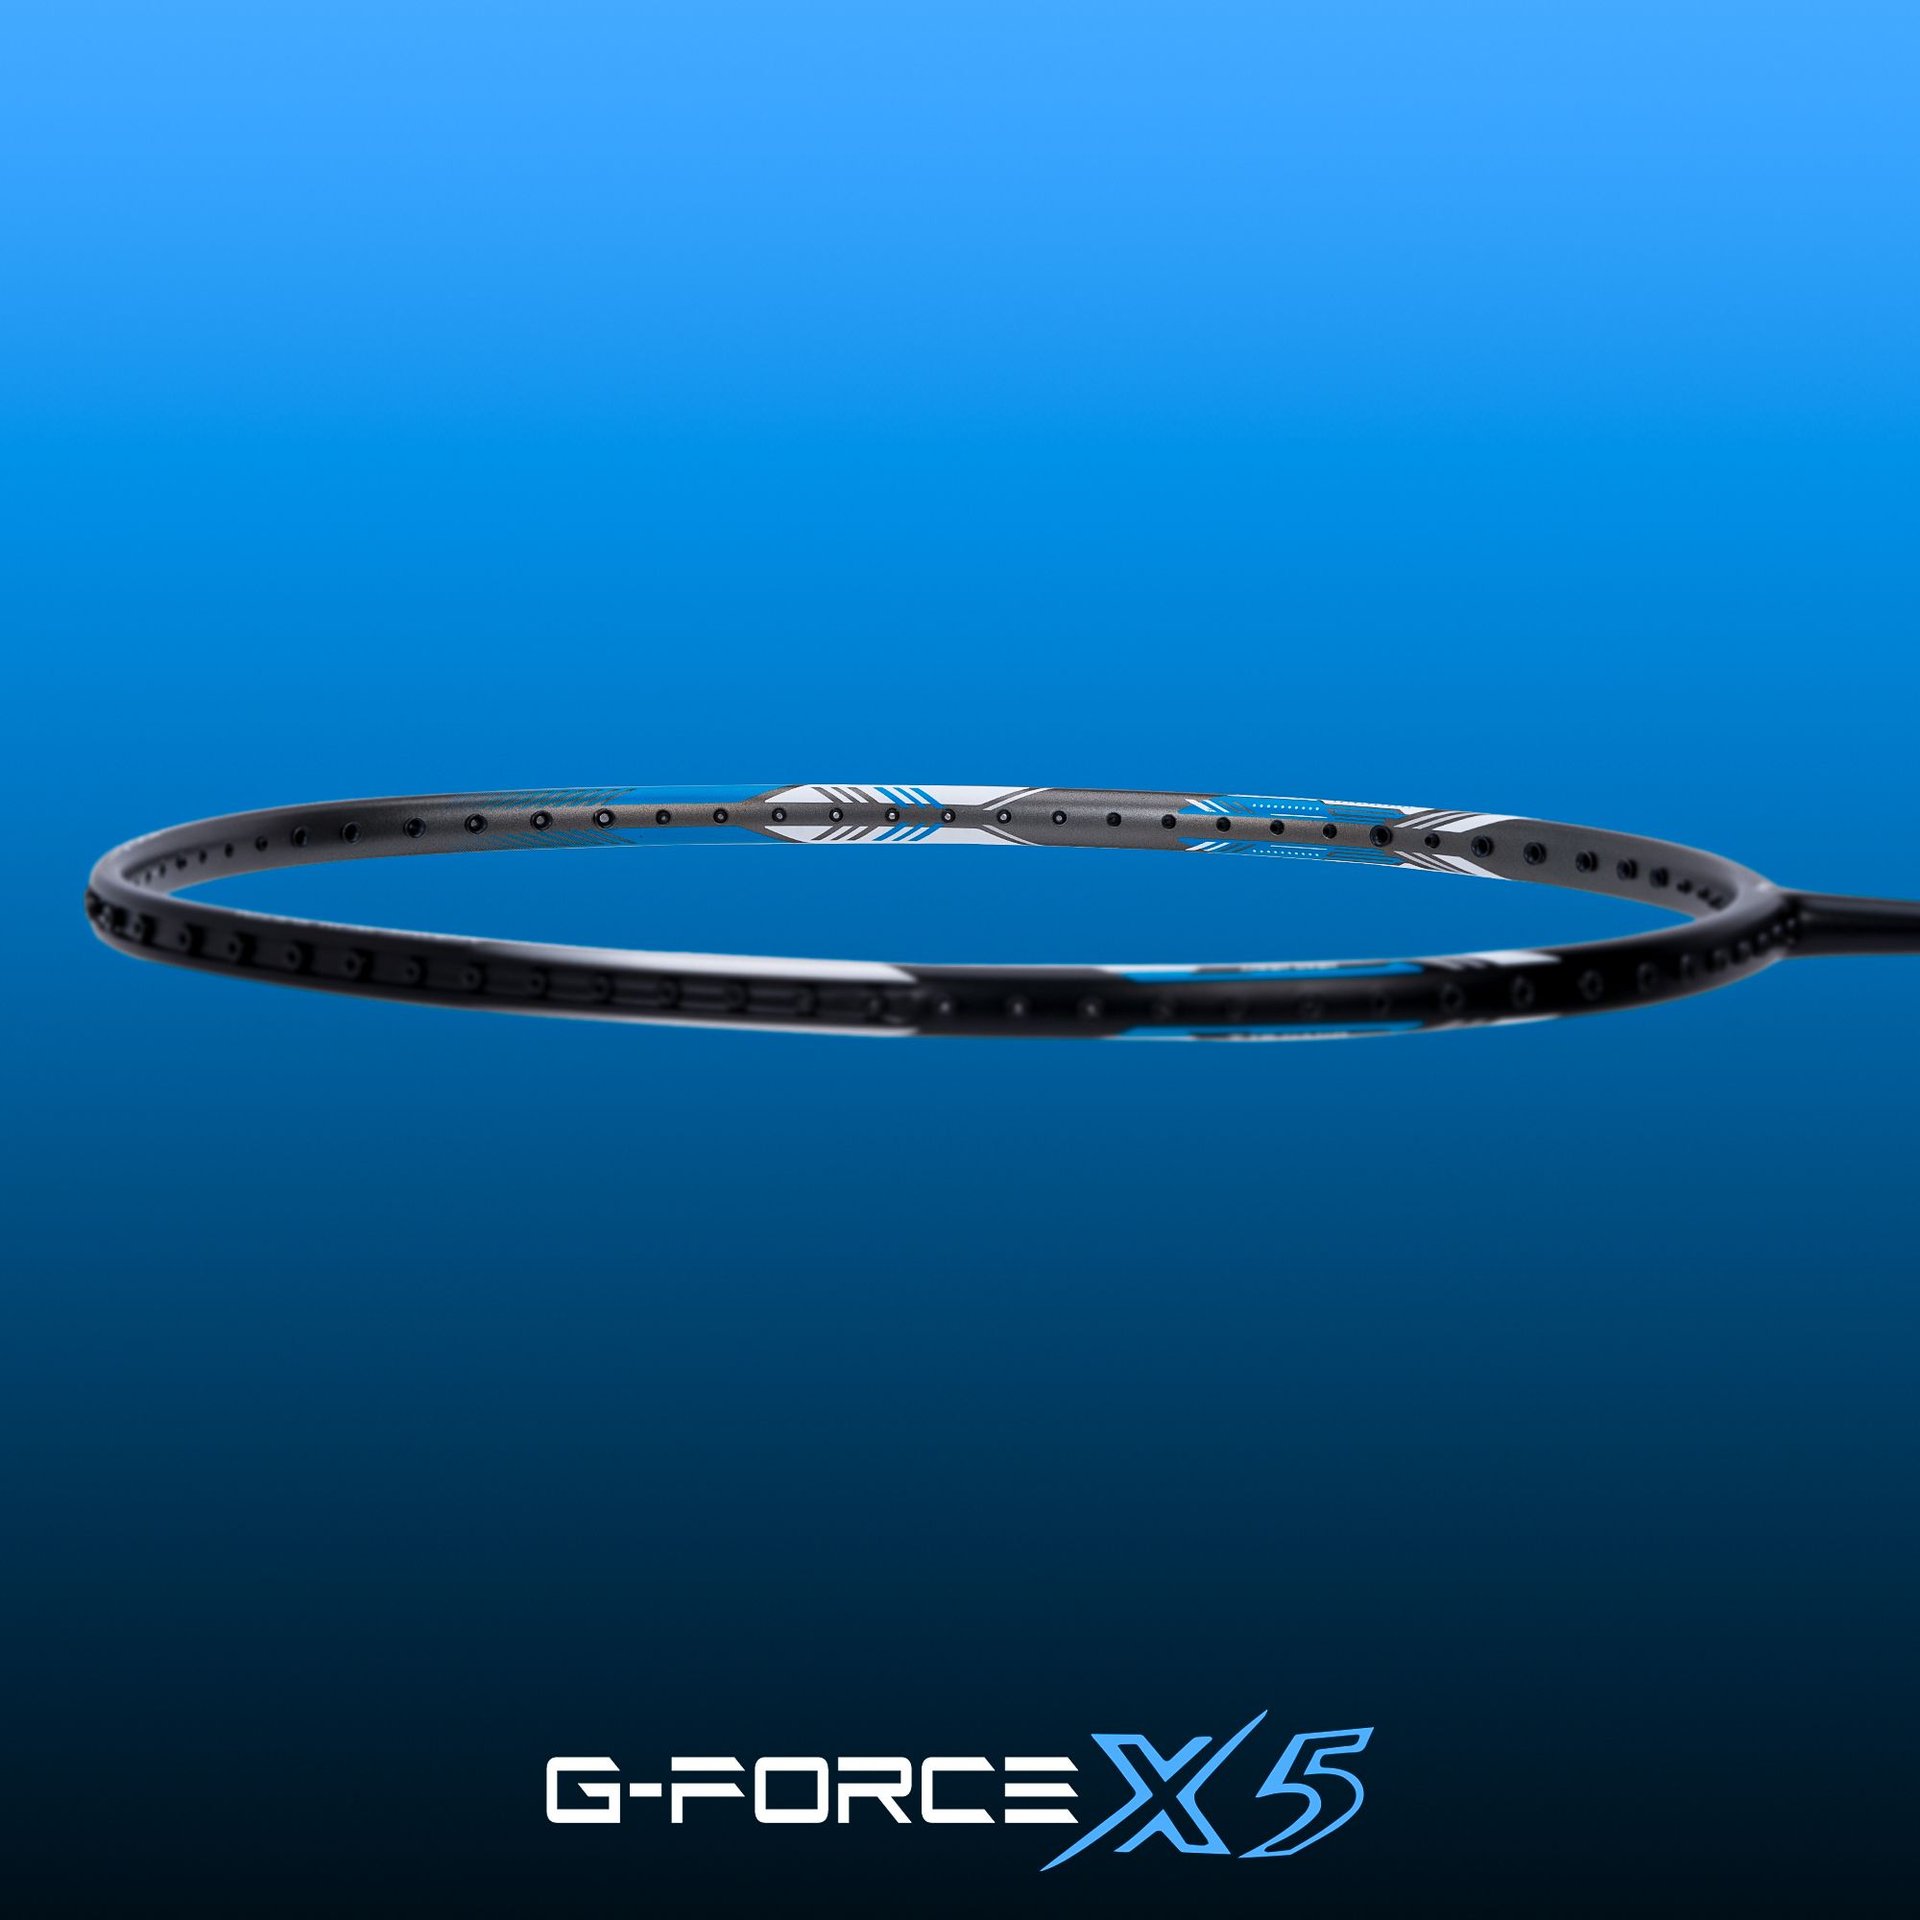 G-Force X5 SuperLight frame design